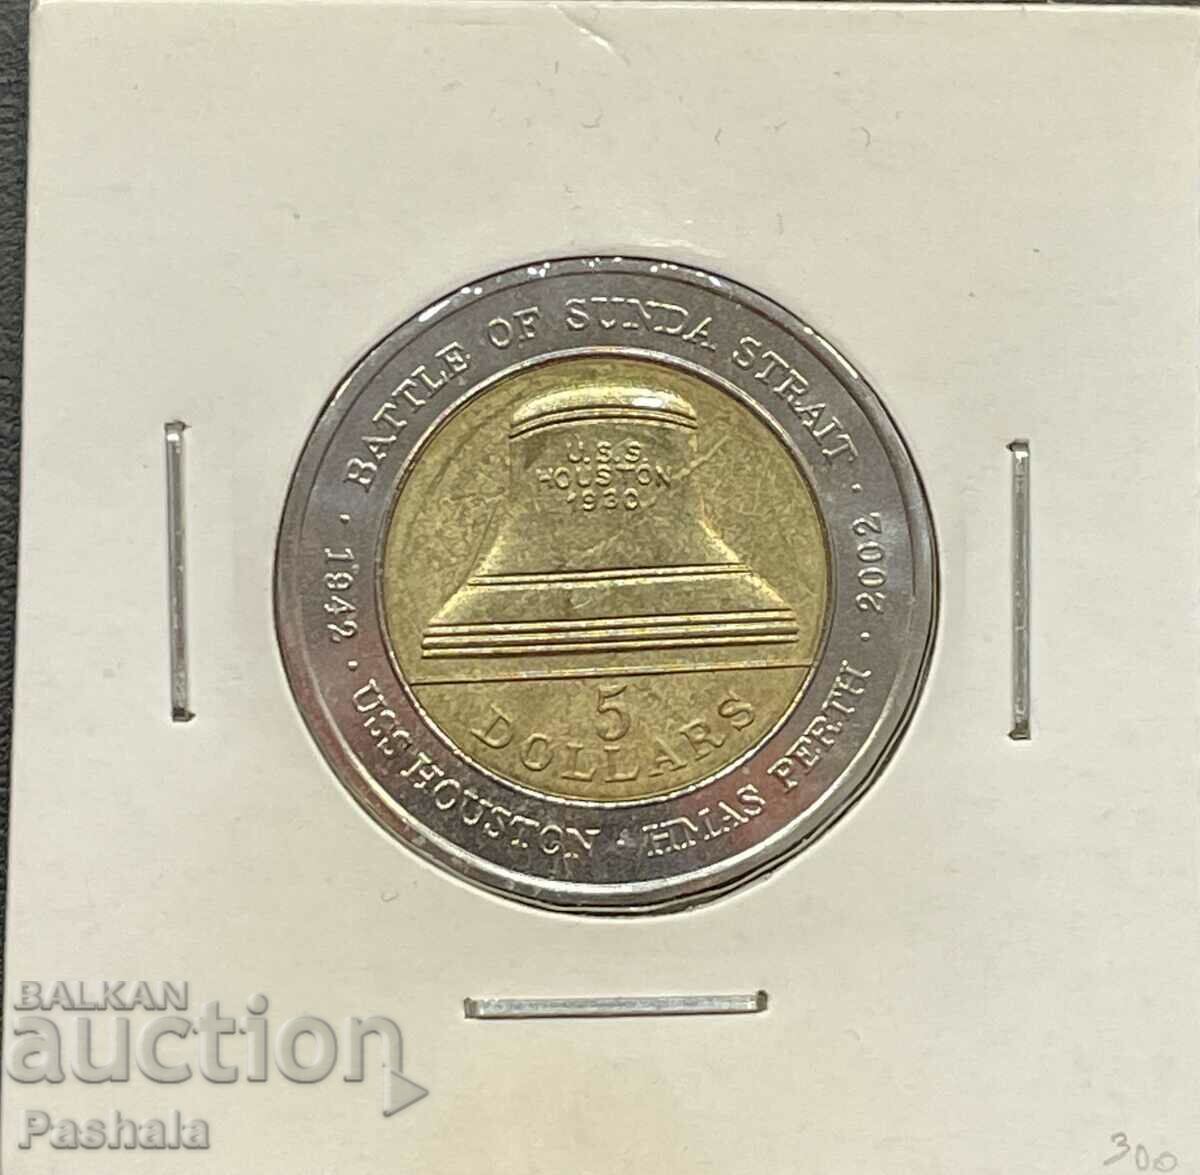 Australia 5 USD 2002